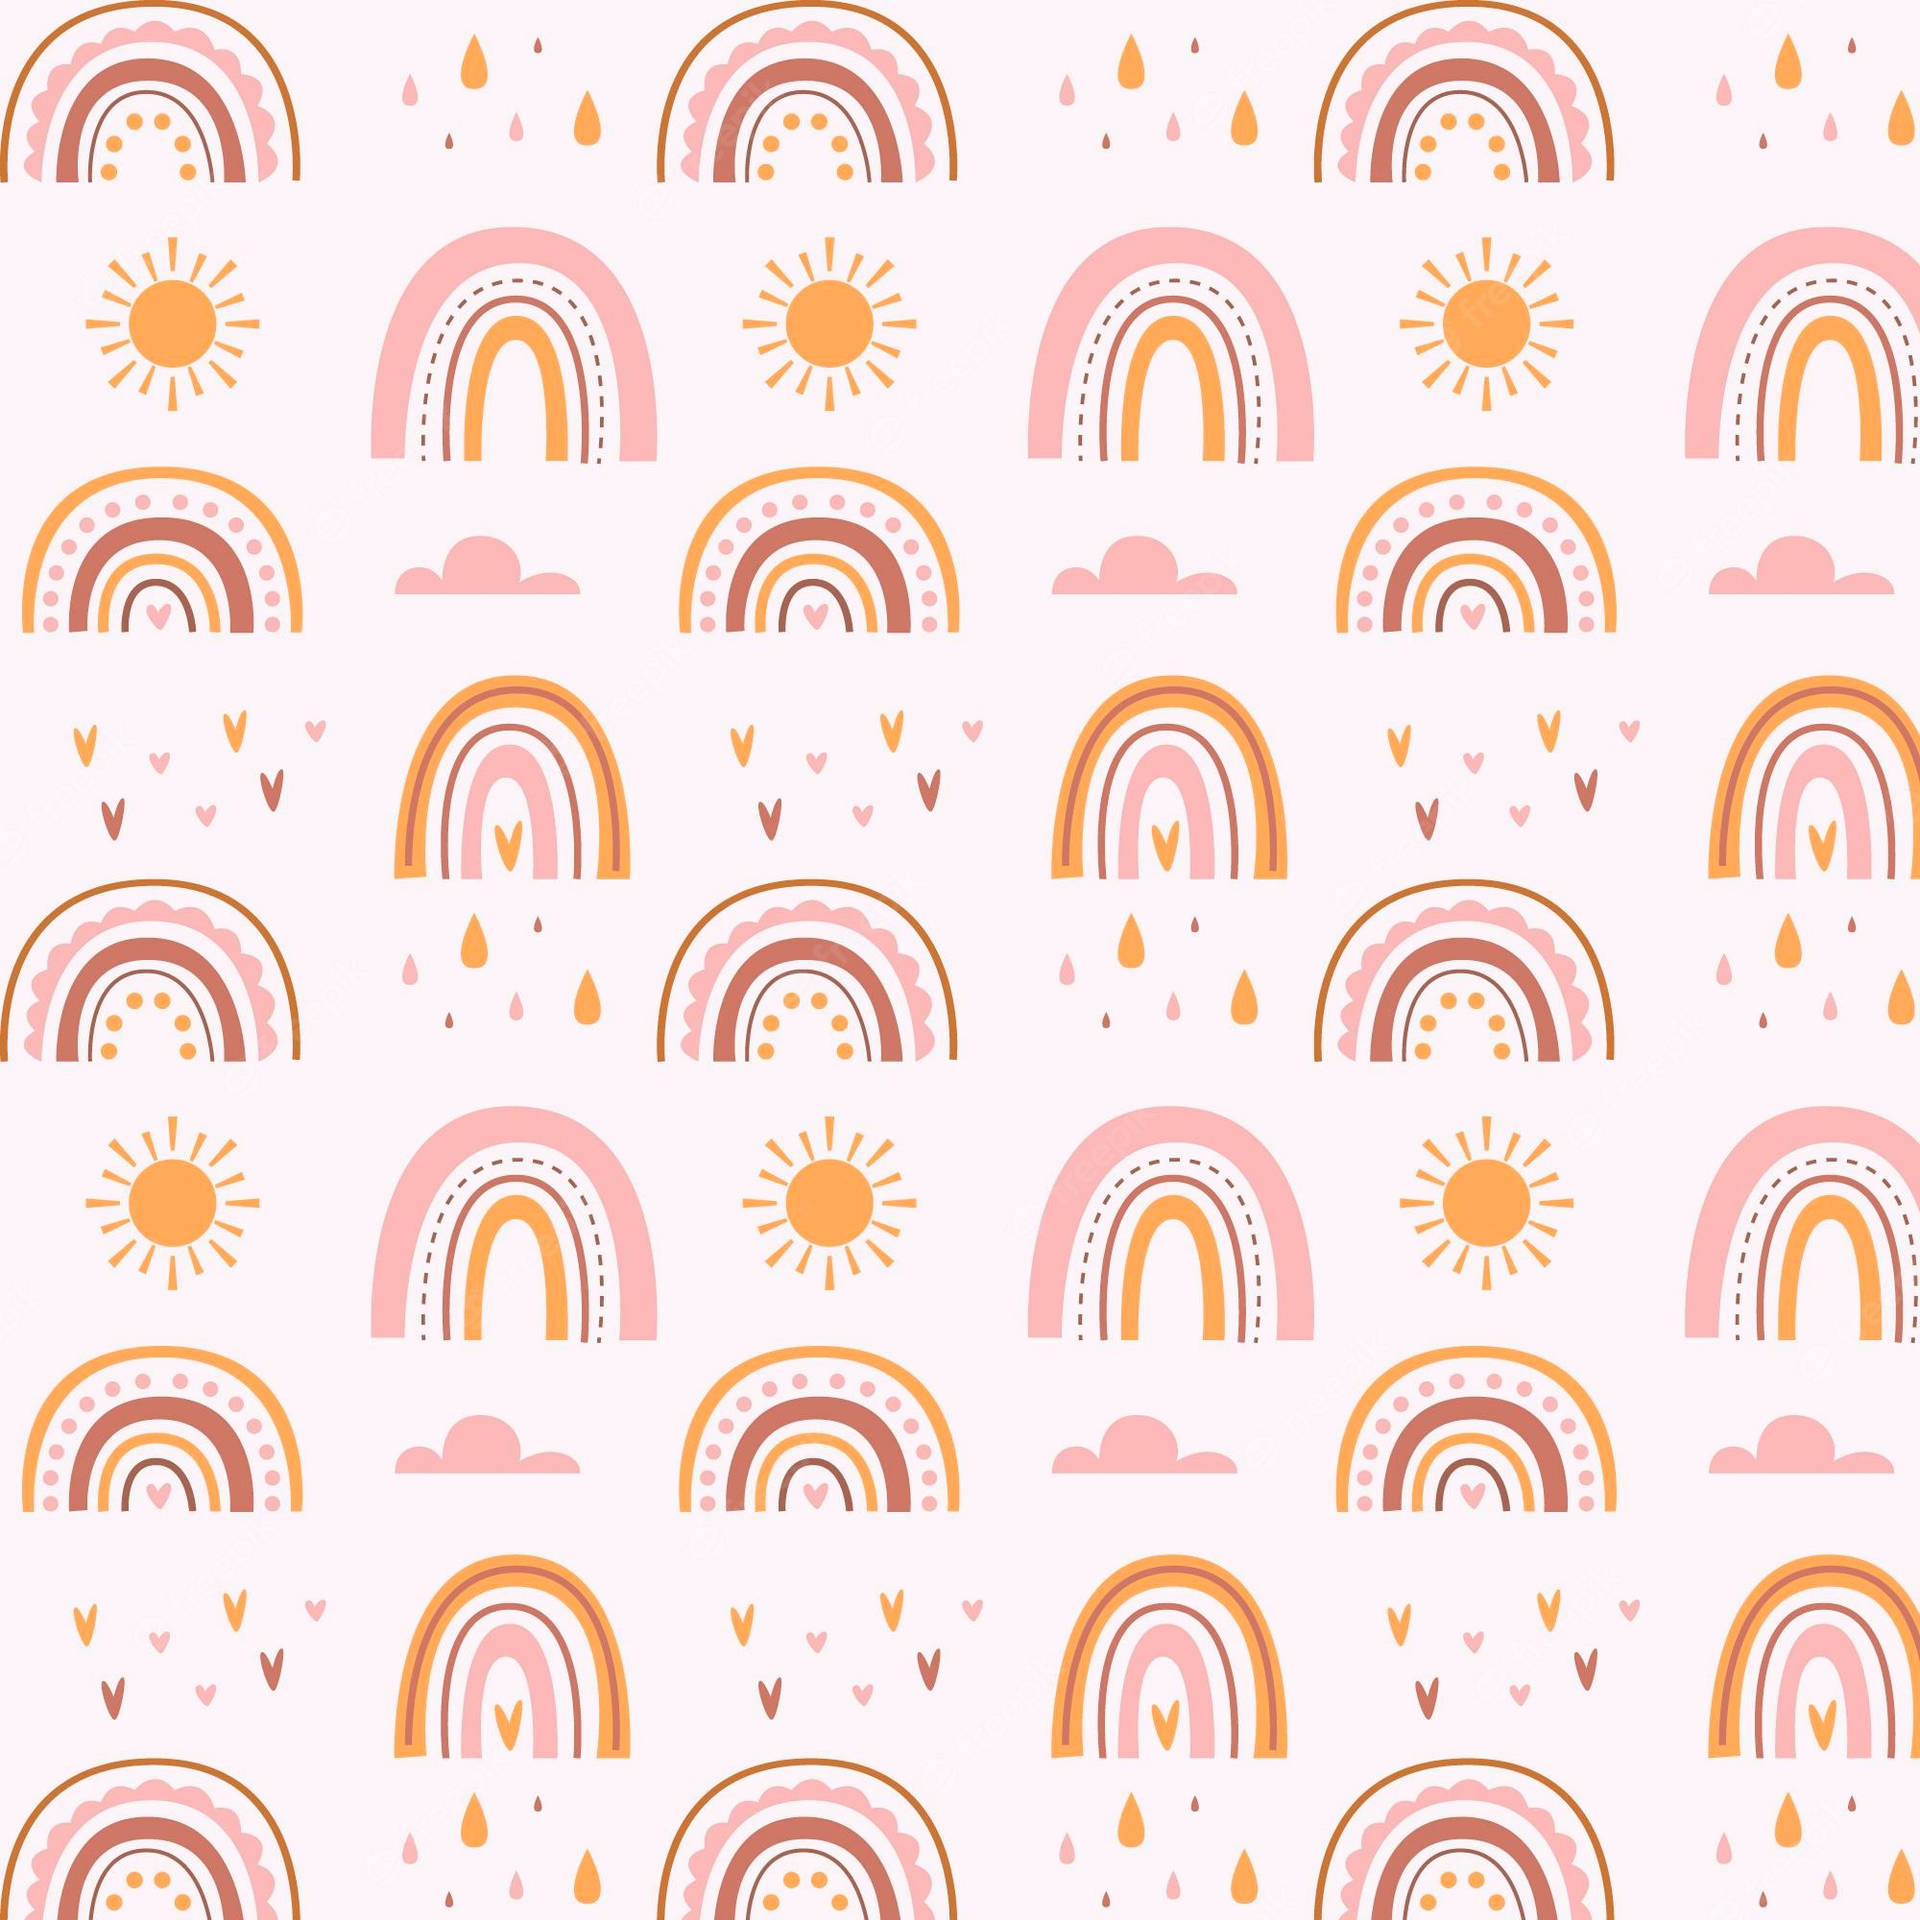 Free Pink Boho Wallpaper  Download in Illustrator EPS SVG JPG PNG   Templatenet